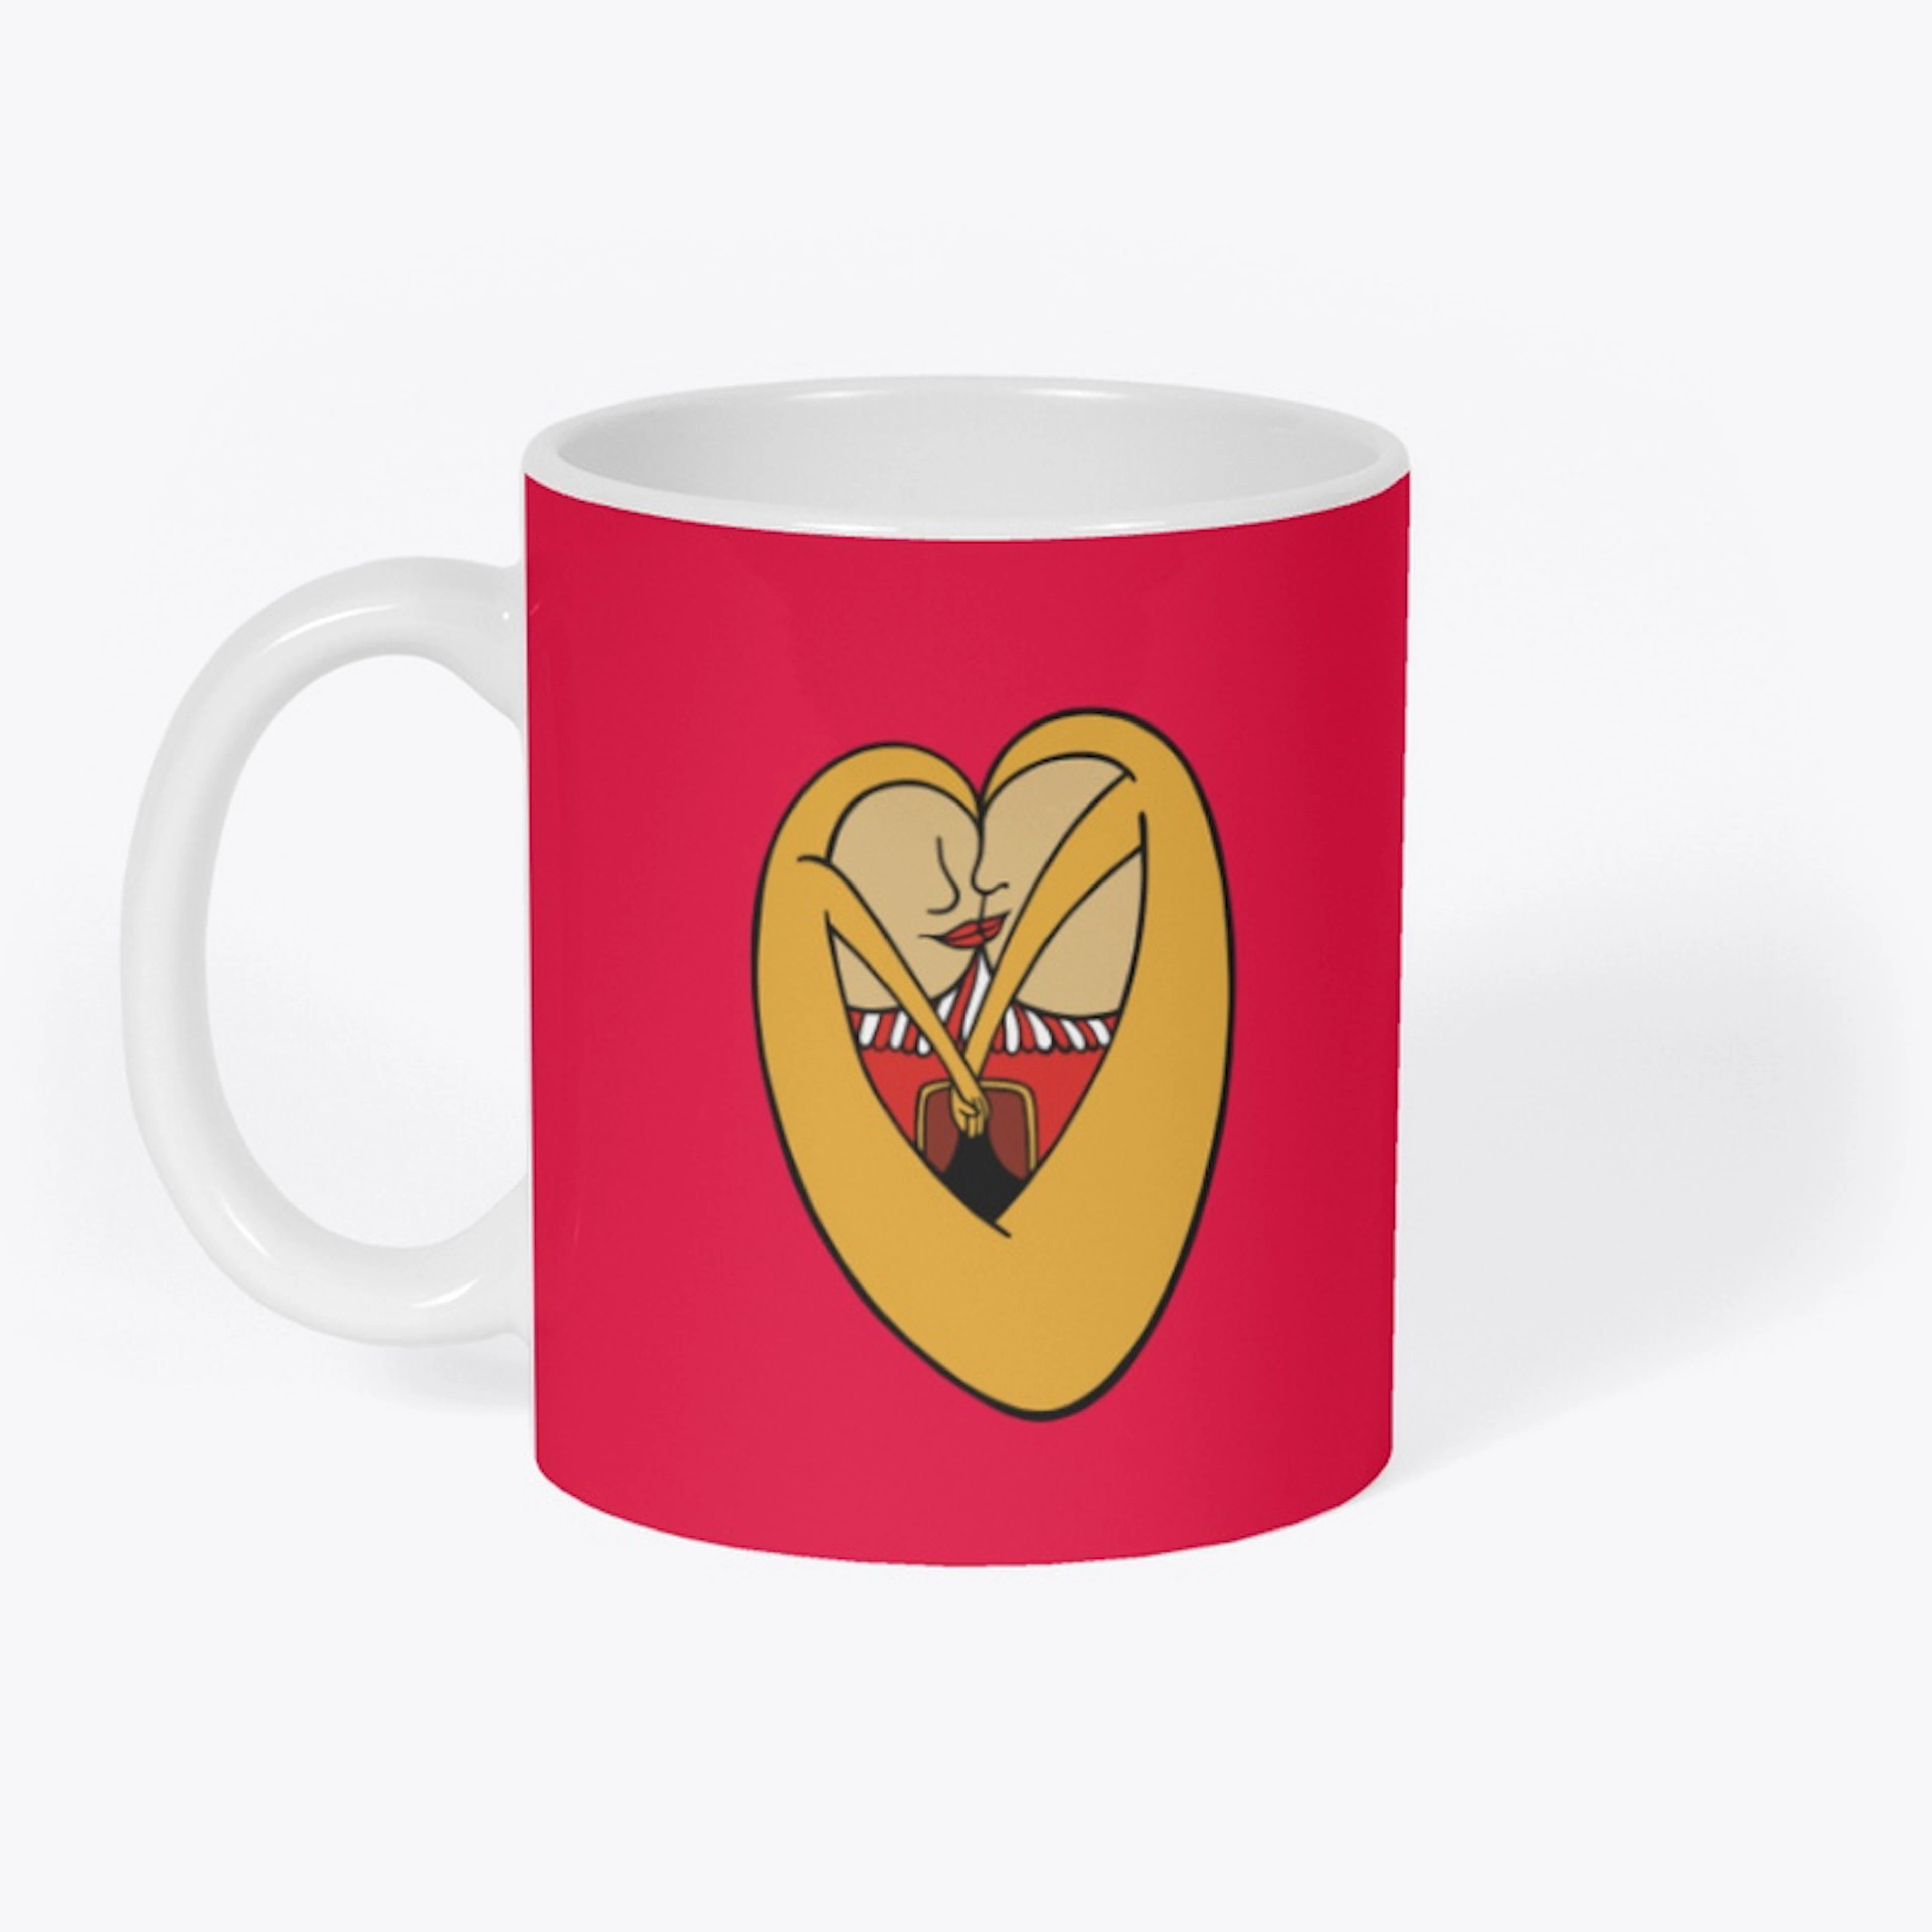 Agape Mugs. Coffee Cup.